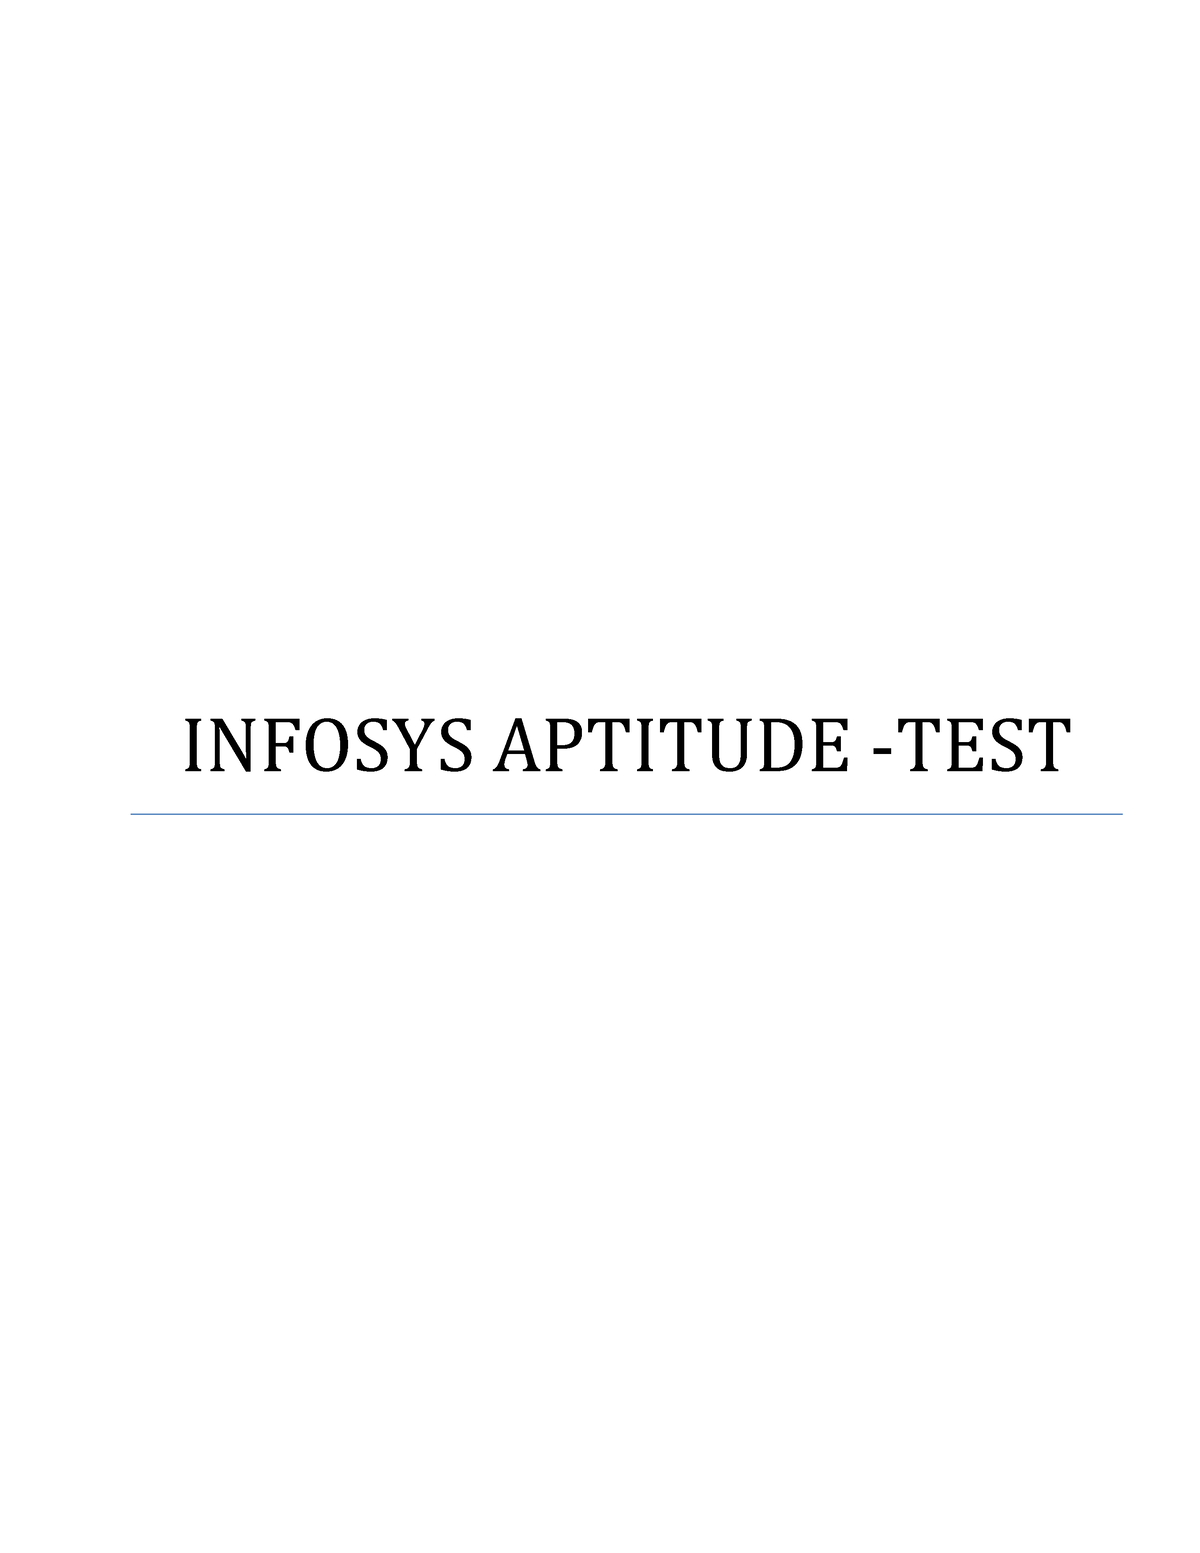 copy-of-infosys-aptitude-model-papers-1473177928759-infosys-aptitude-test-written-test